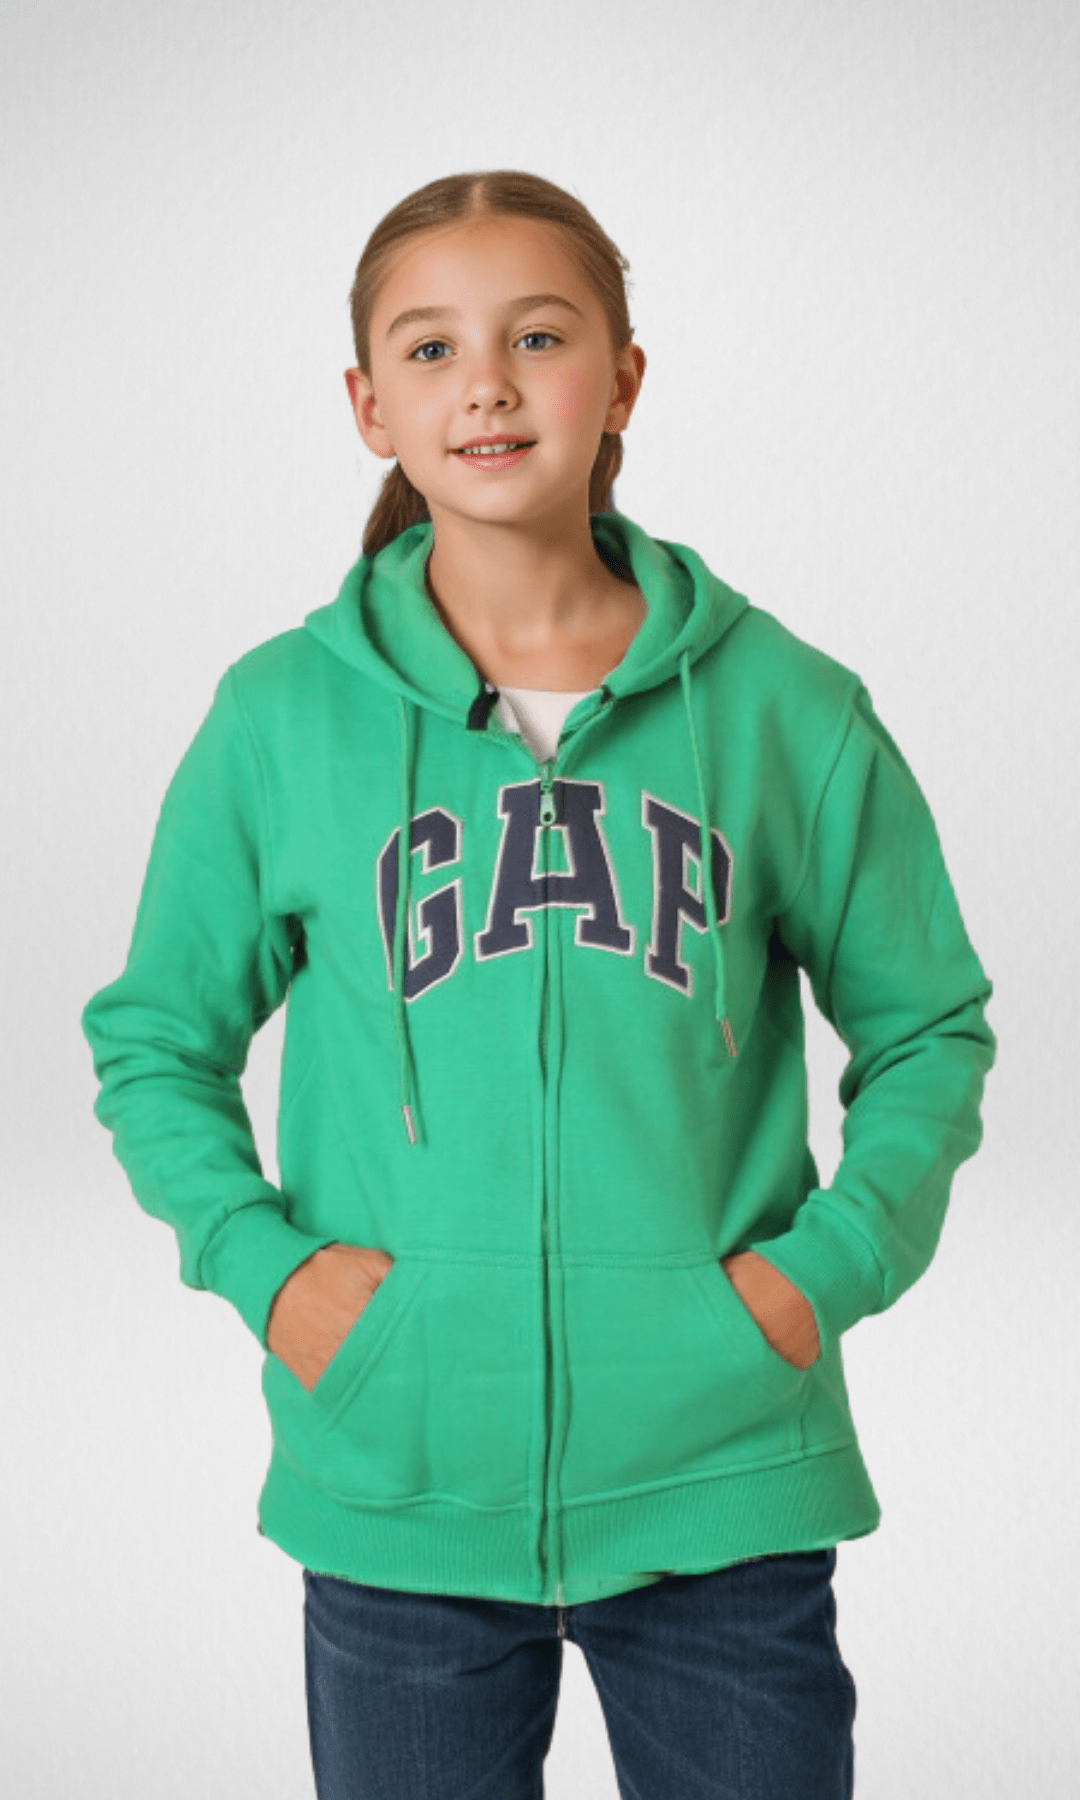 Kids Winter 24 Kids Sweatshirt Kids New GAP Jacket - Green